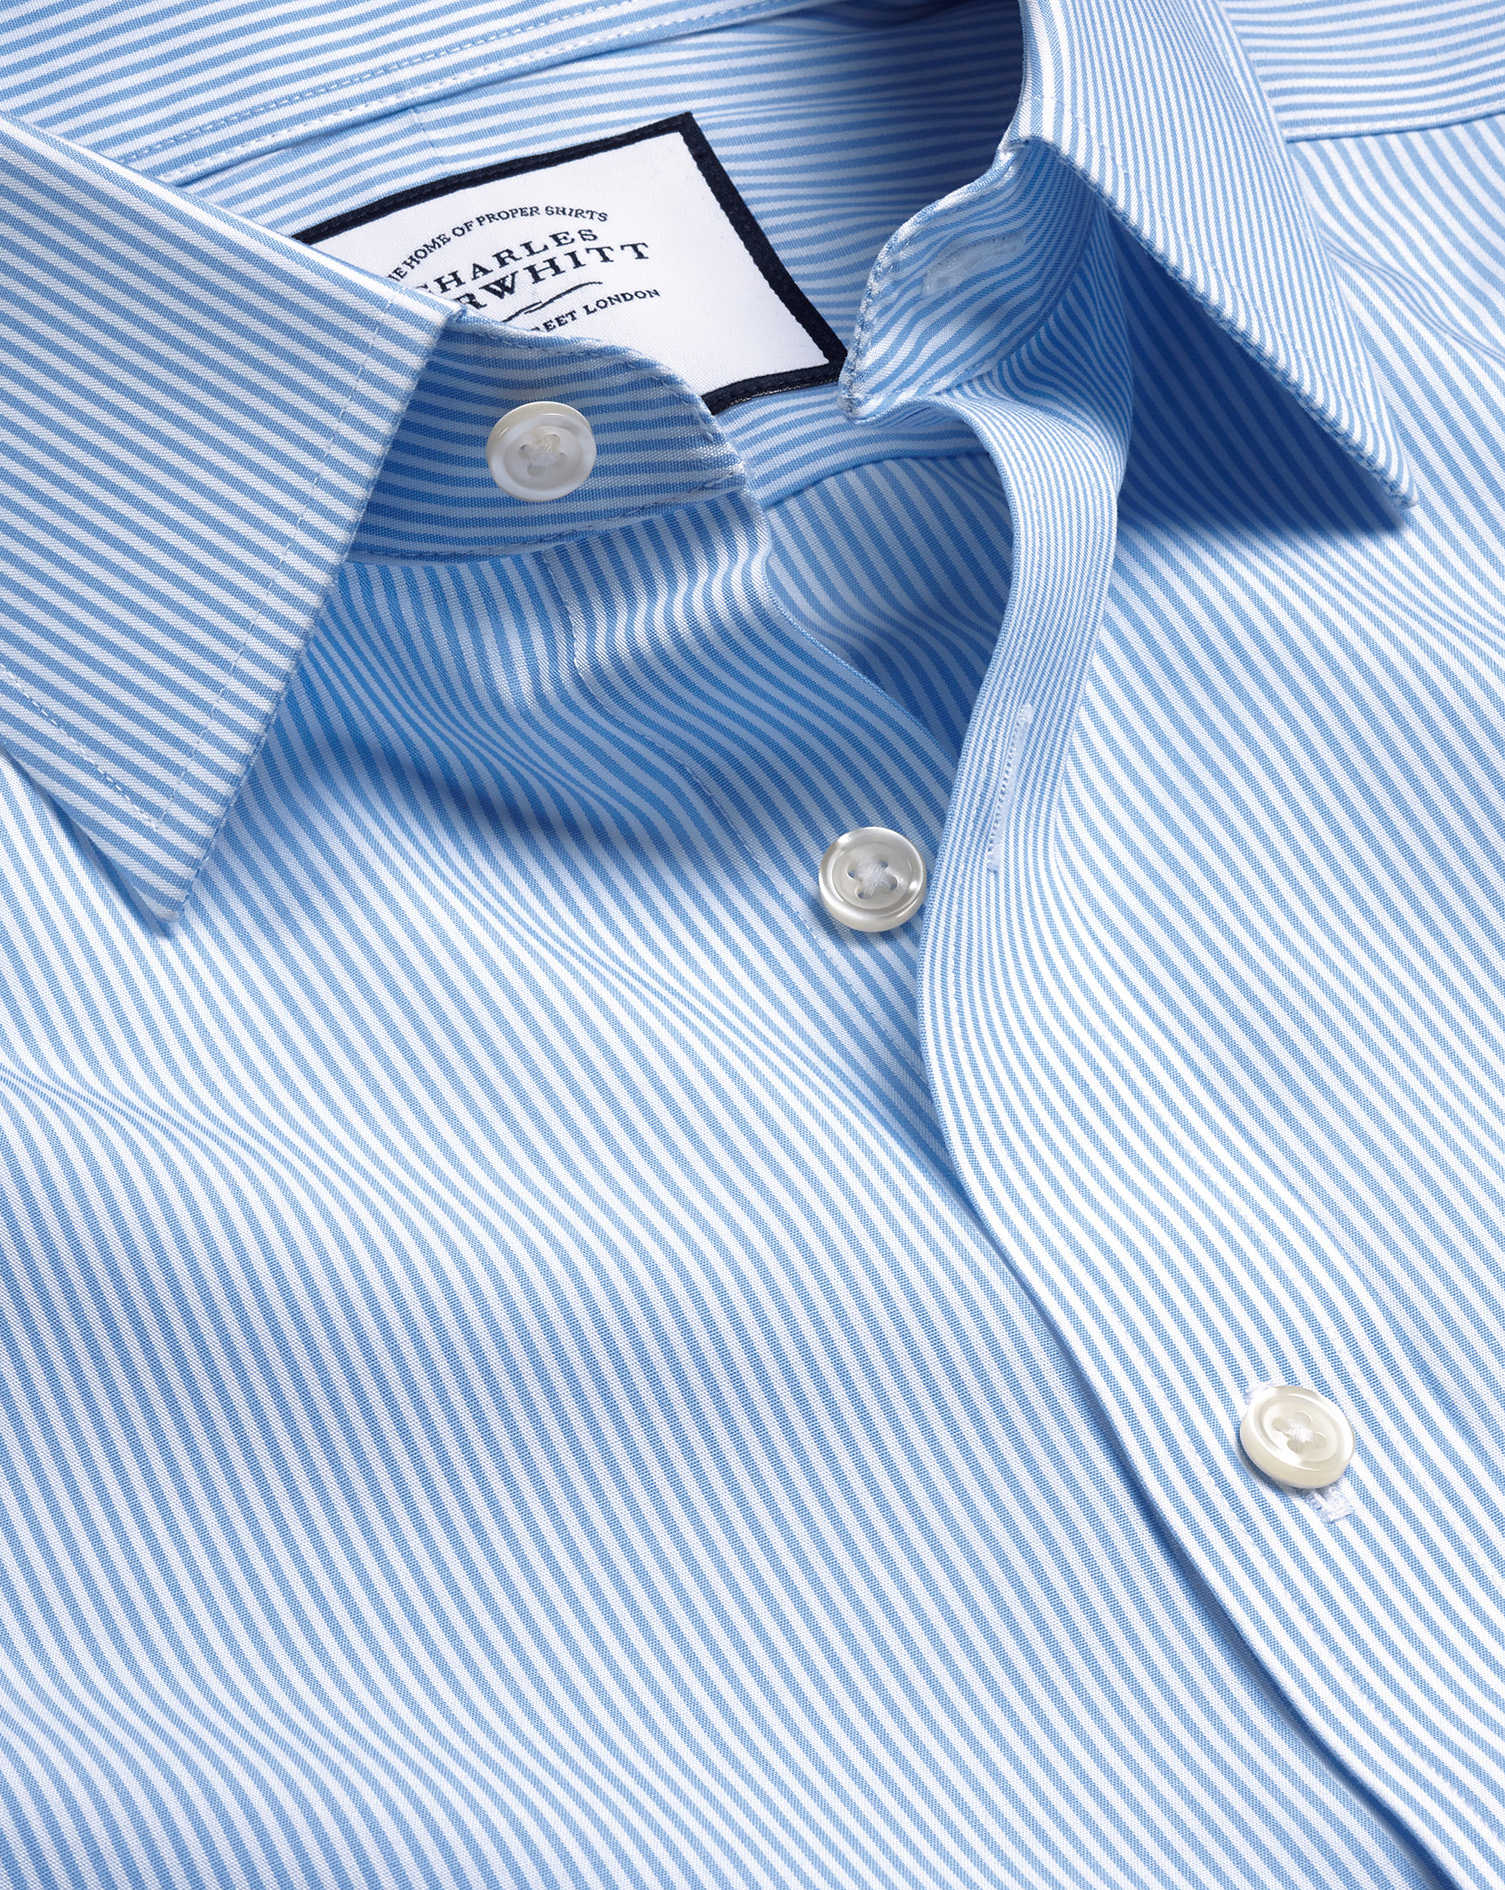 Men's Charles Tyrwhitt Blue Non-Iron Bengal Stripe Dress Shirt - Sky French Cuff Size 20/37 Cotton
